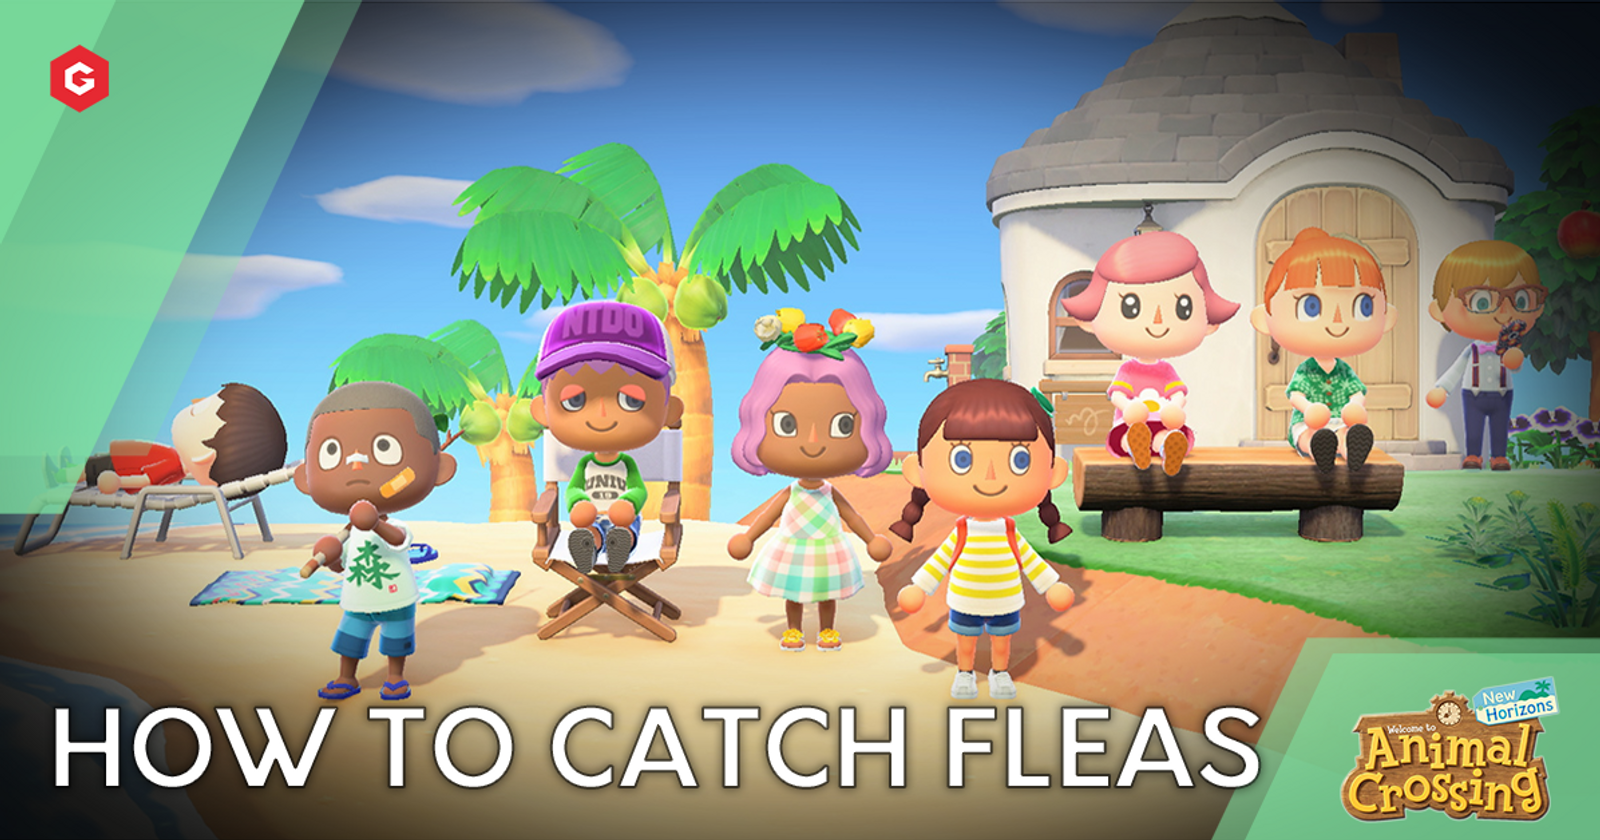 Animal Crossing New Horizons: How To Catch Fleas